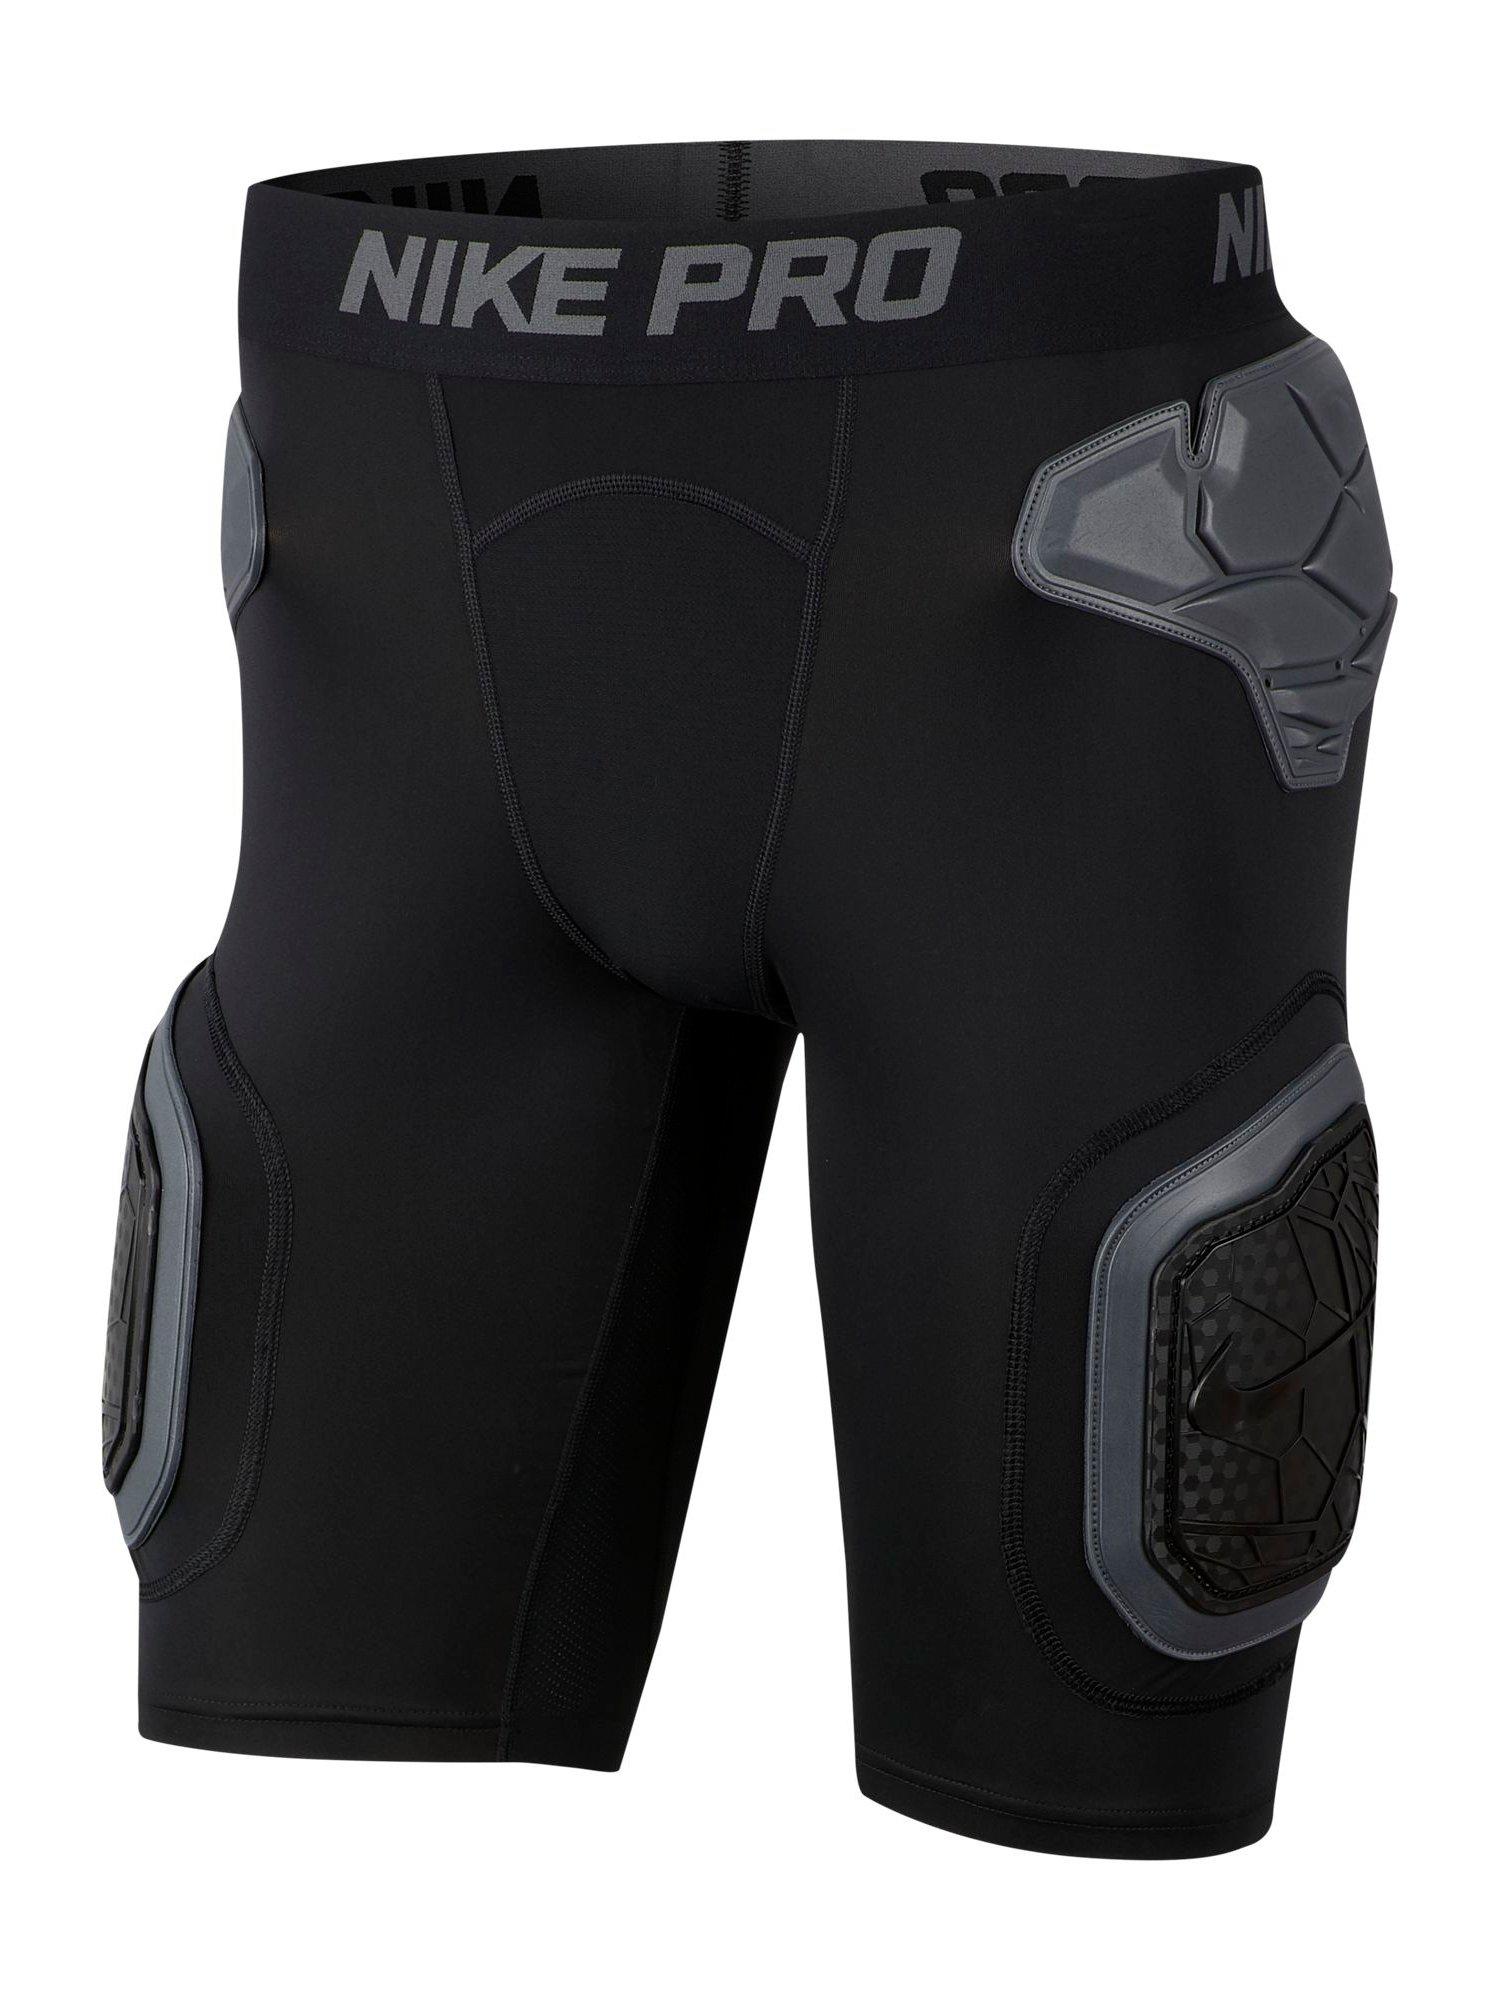 nike pro shorts hibbett sports